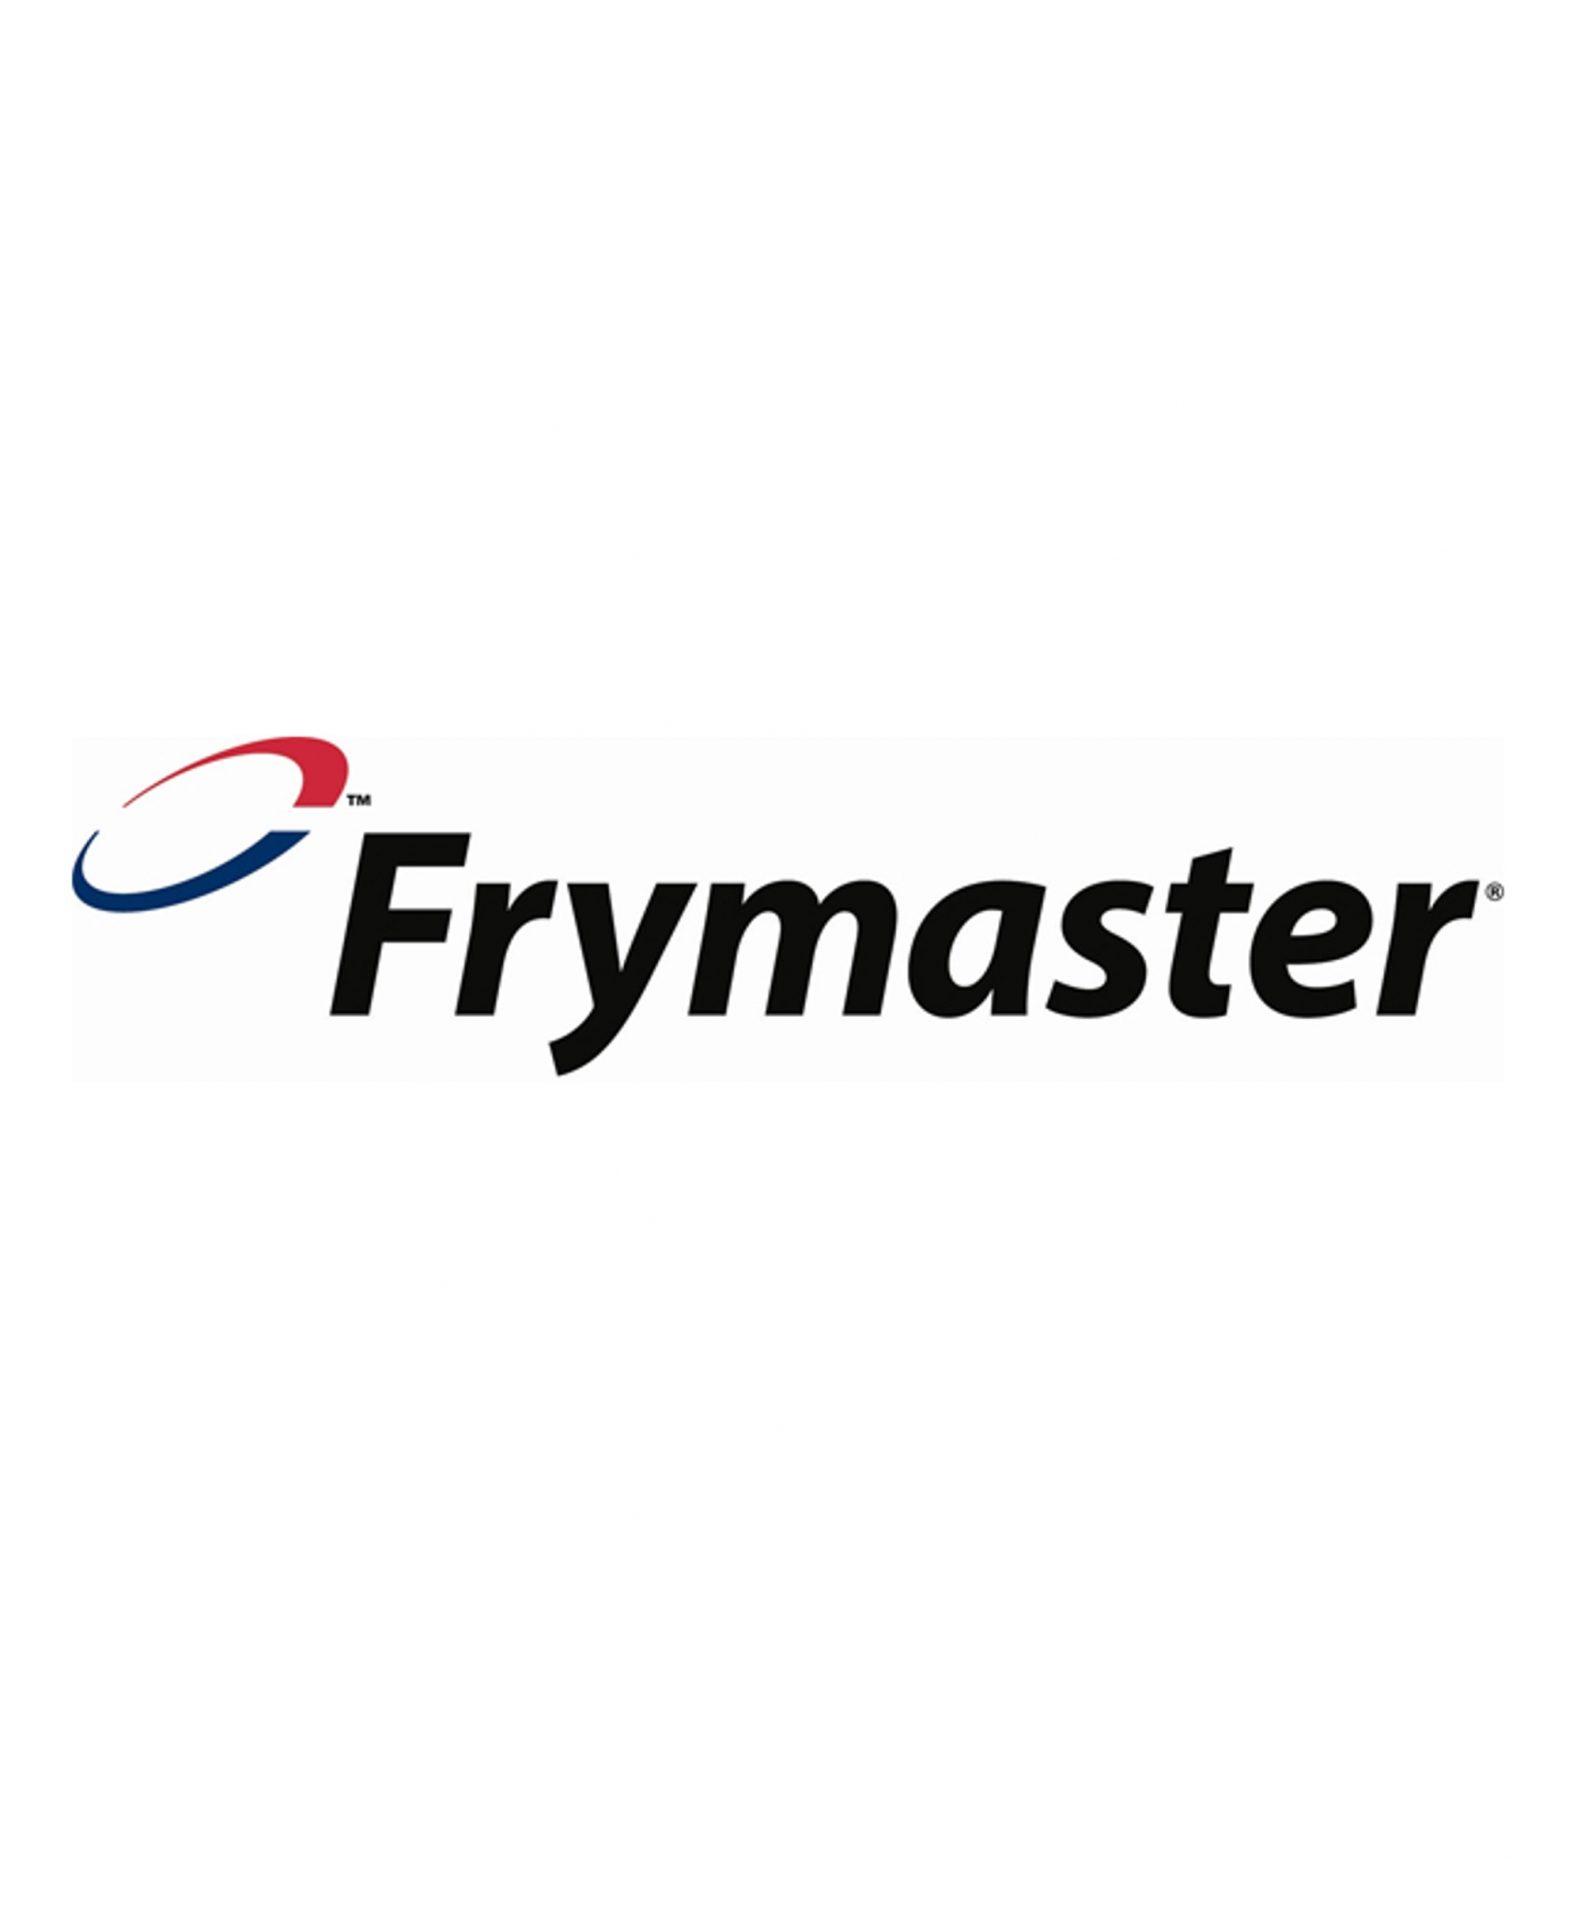 frymaster 1577x1920 - Inicio